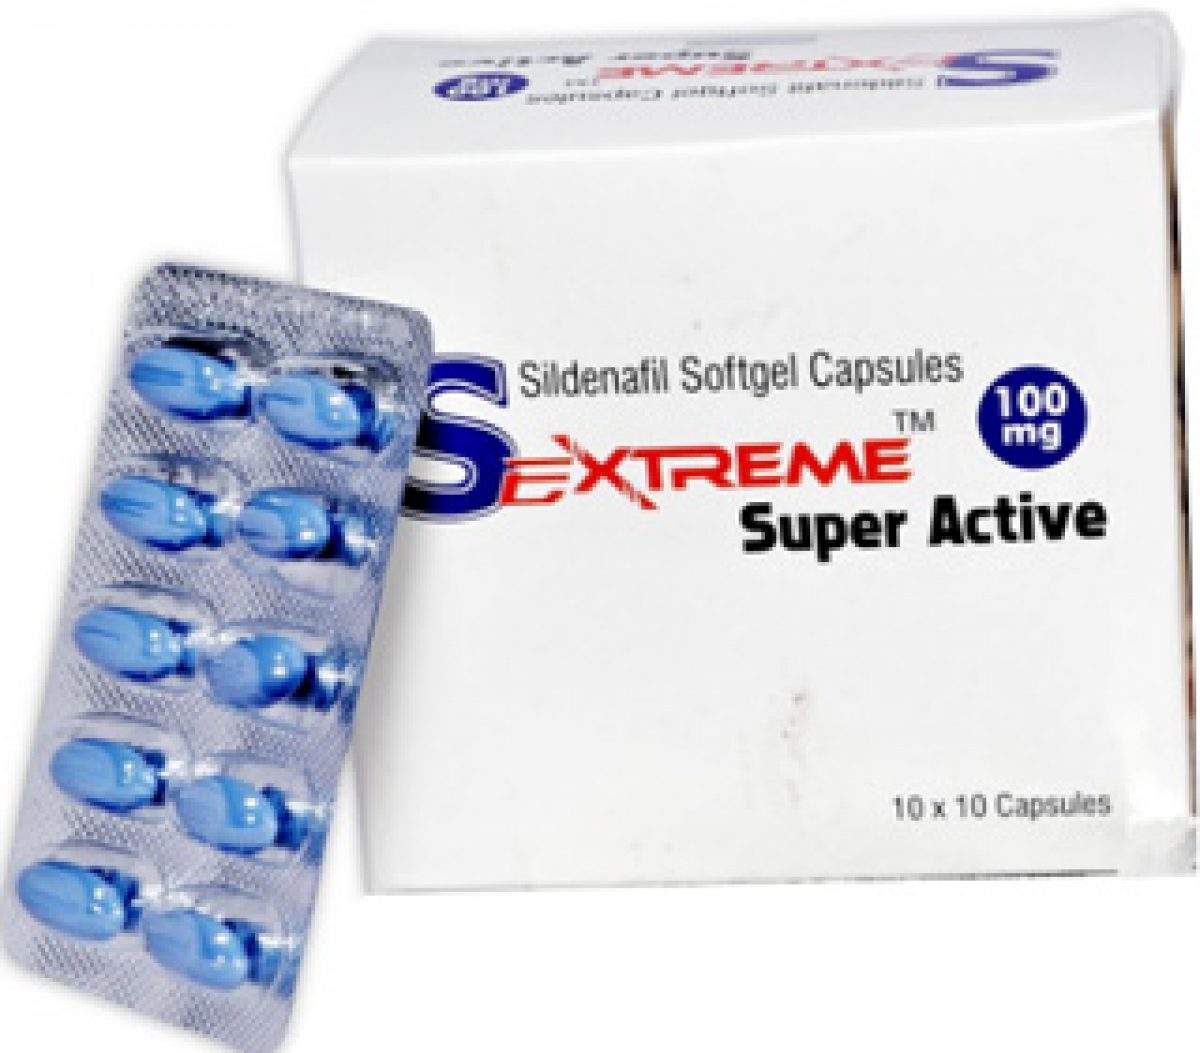 Achat Viagra super active en Belgique - Alphamed Pharmacie